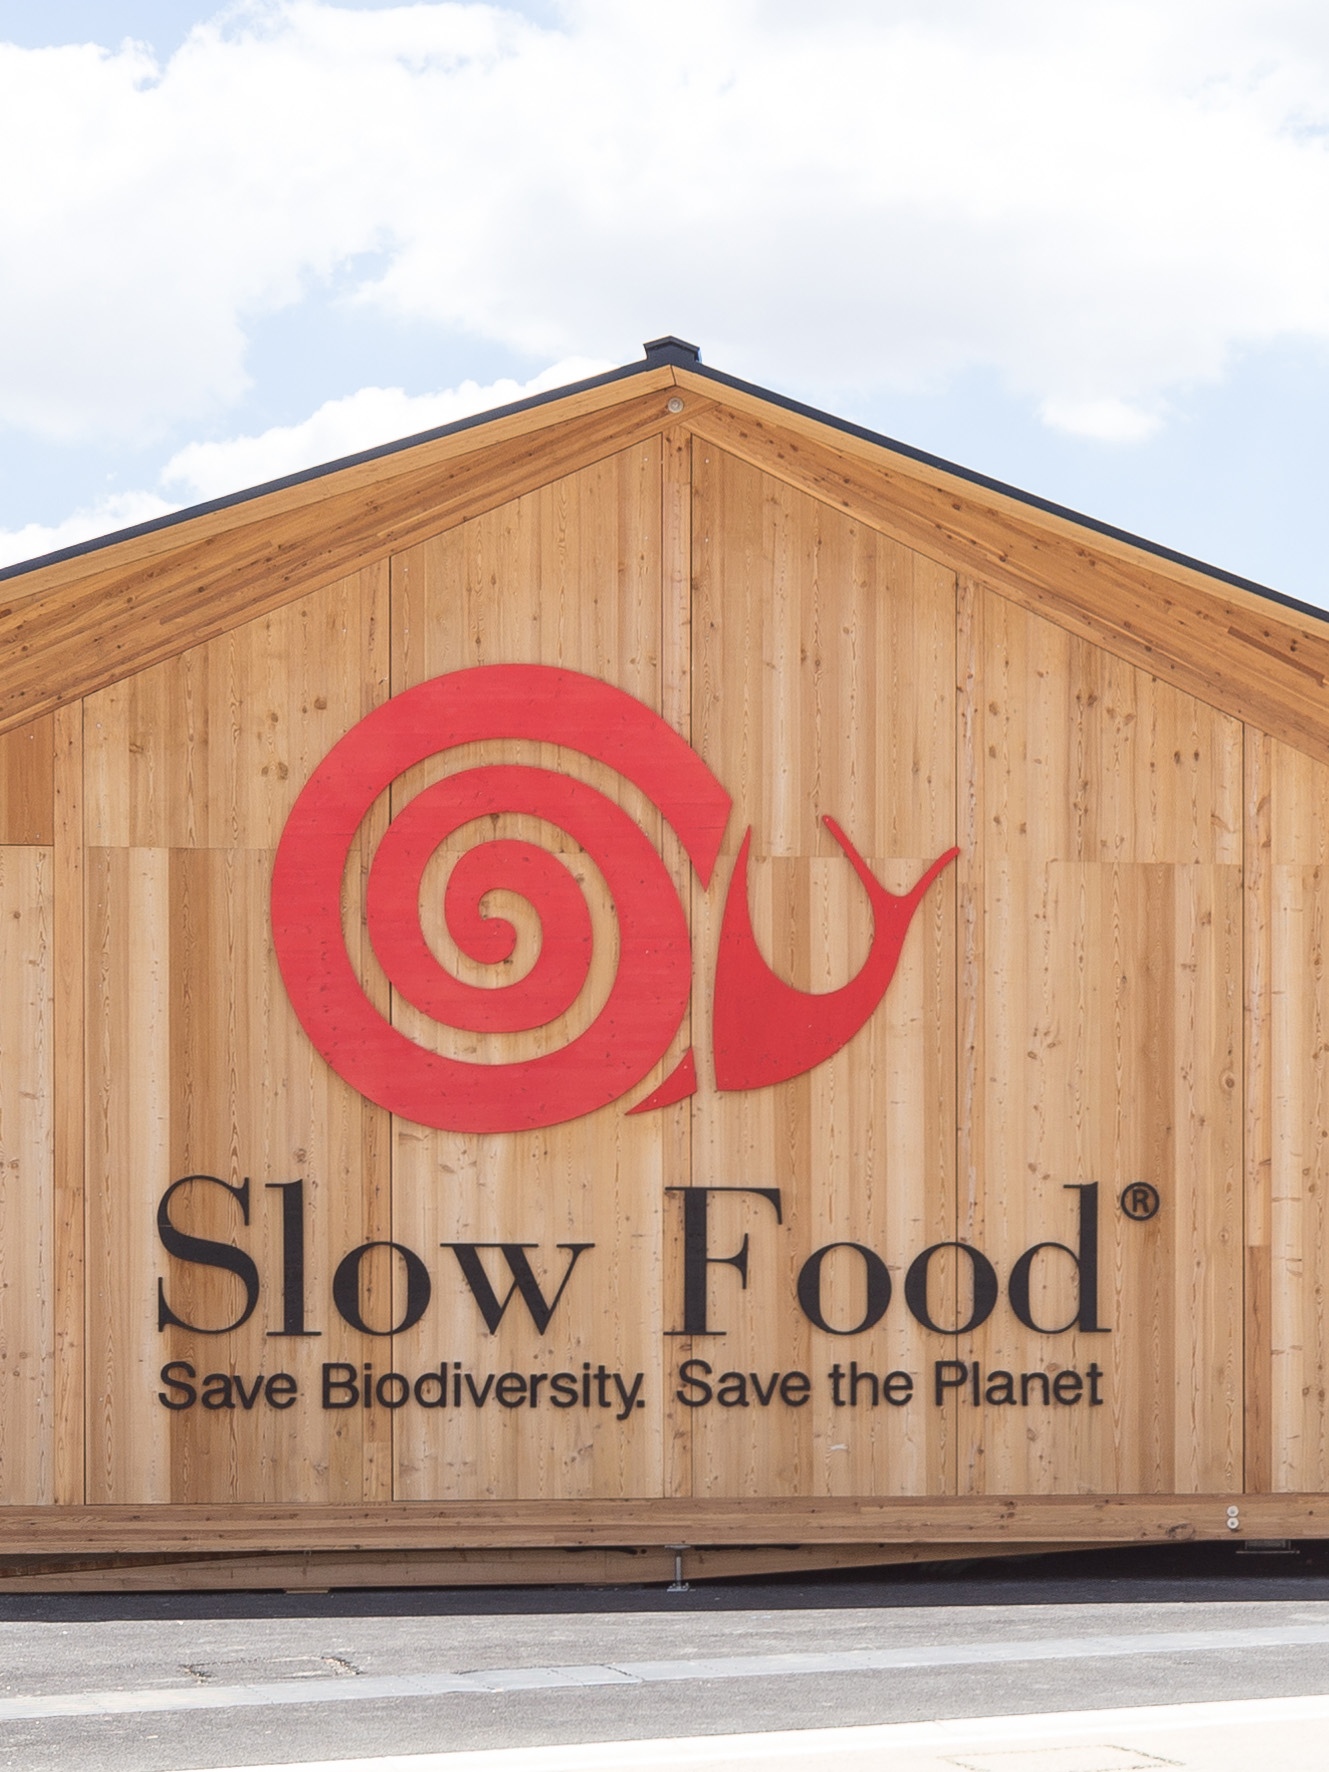 Expo Milano 2015, Slow Food